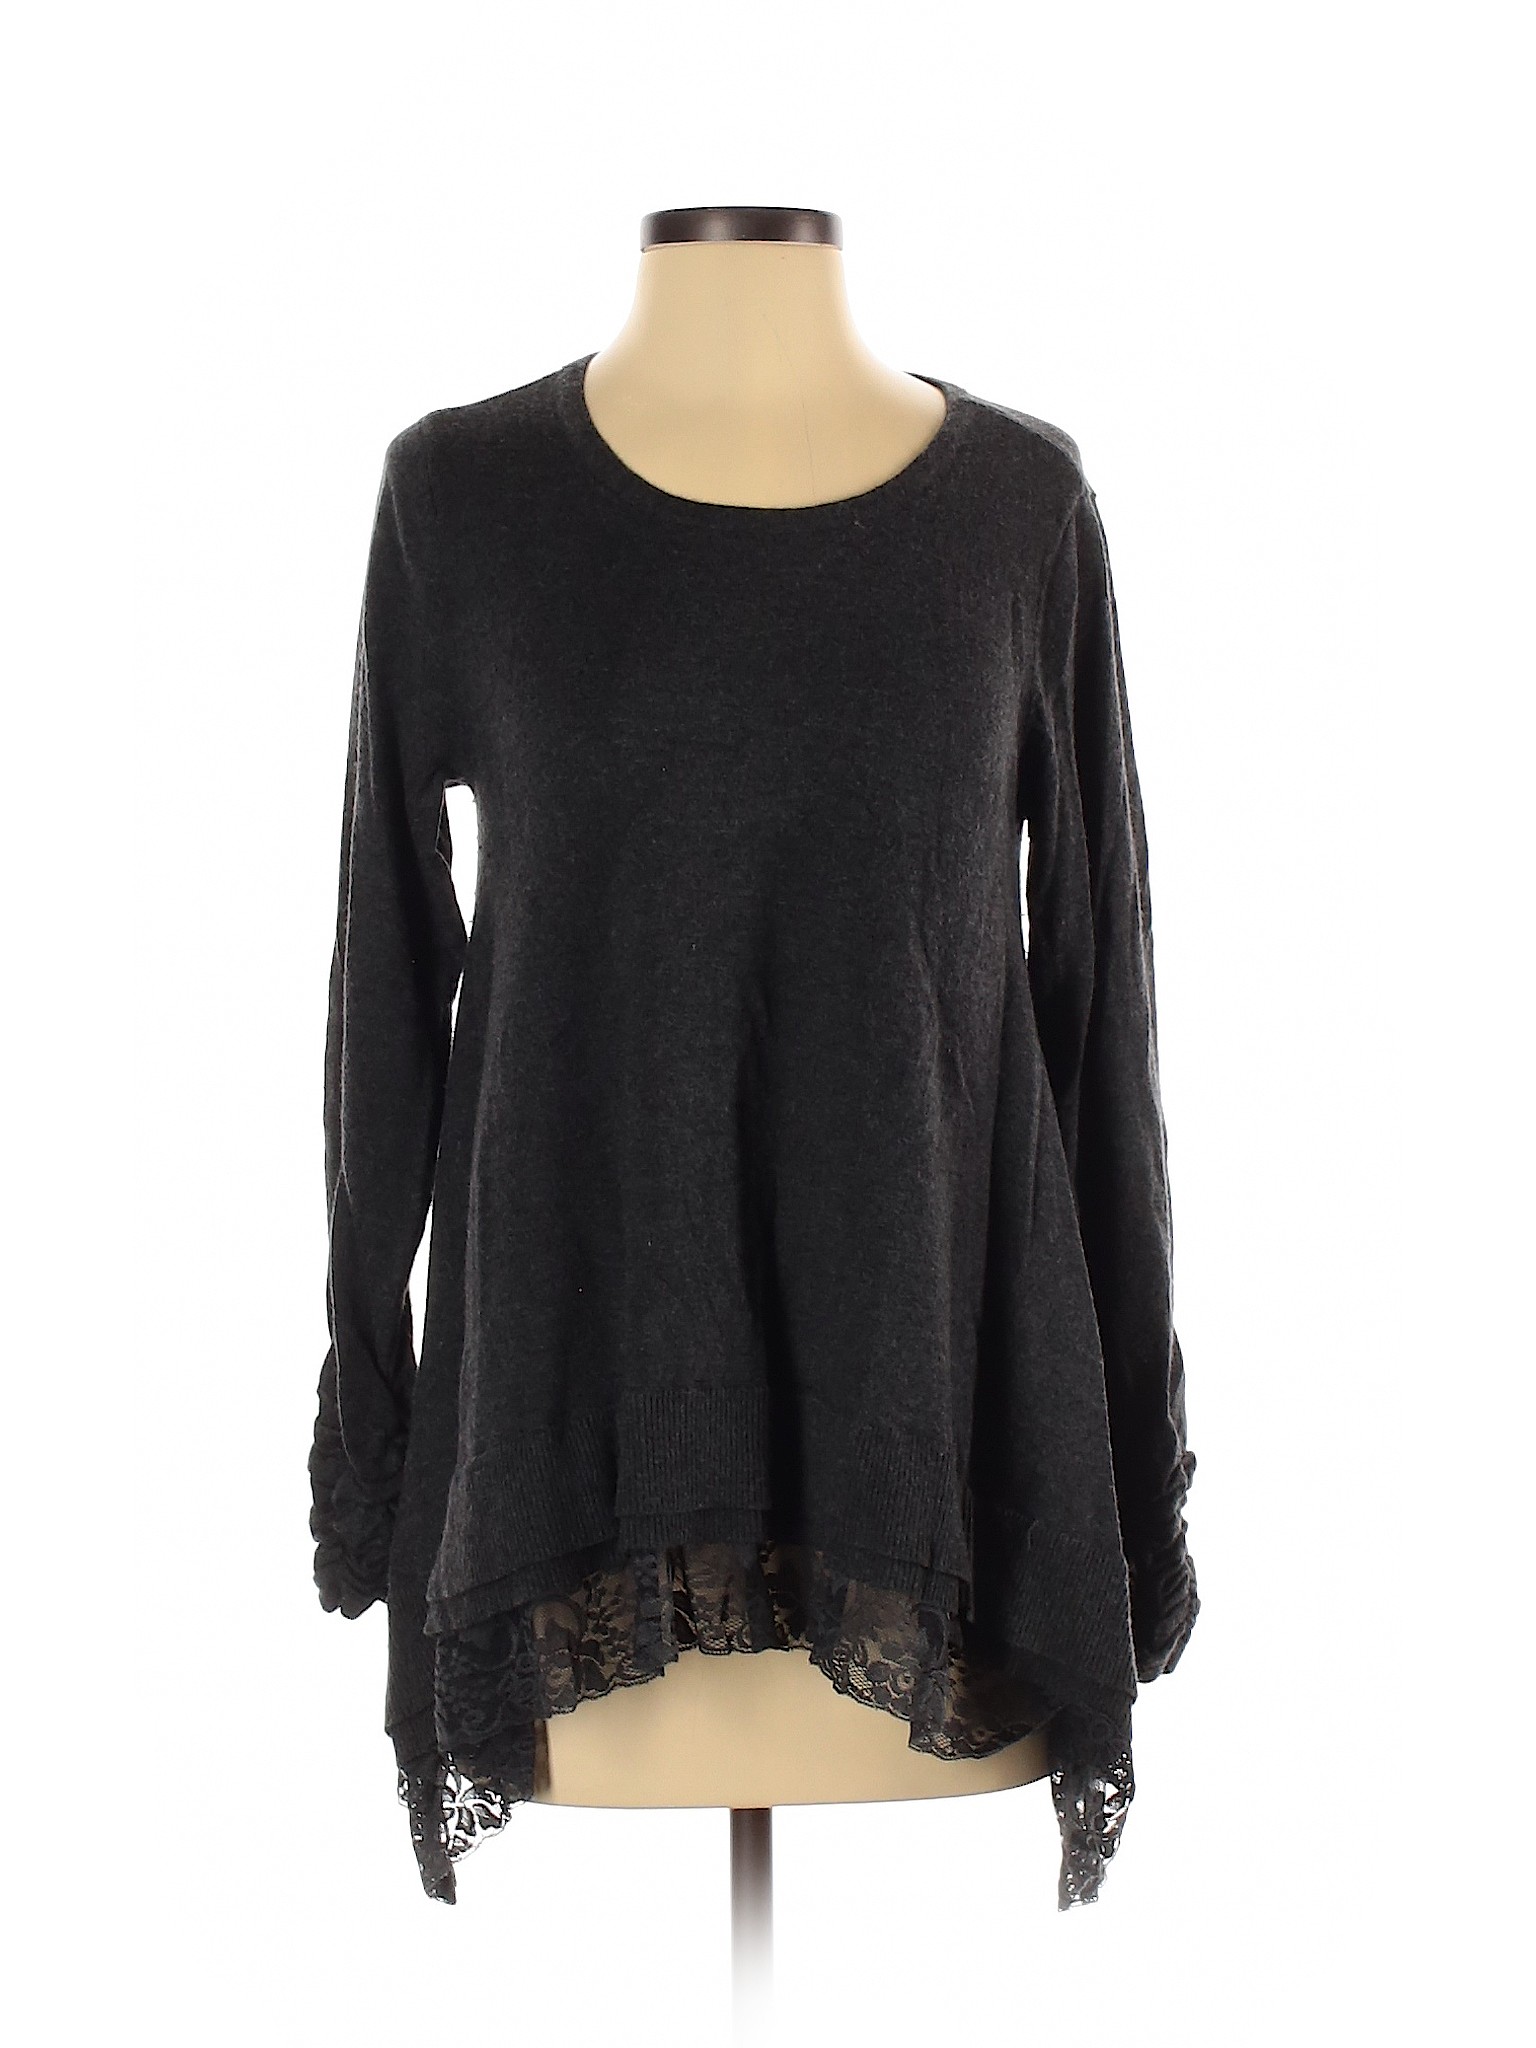 Alfani Women Black Pullover Sweater S | eBay